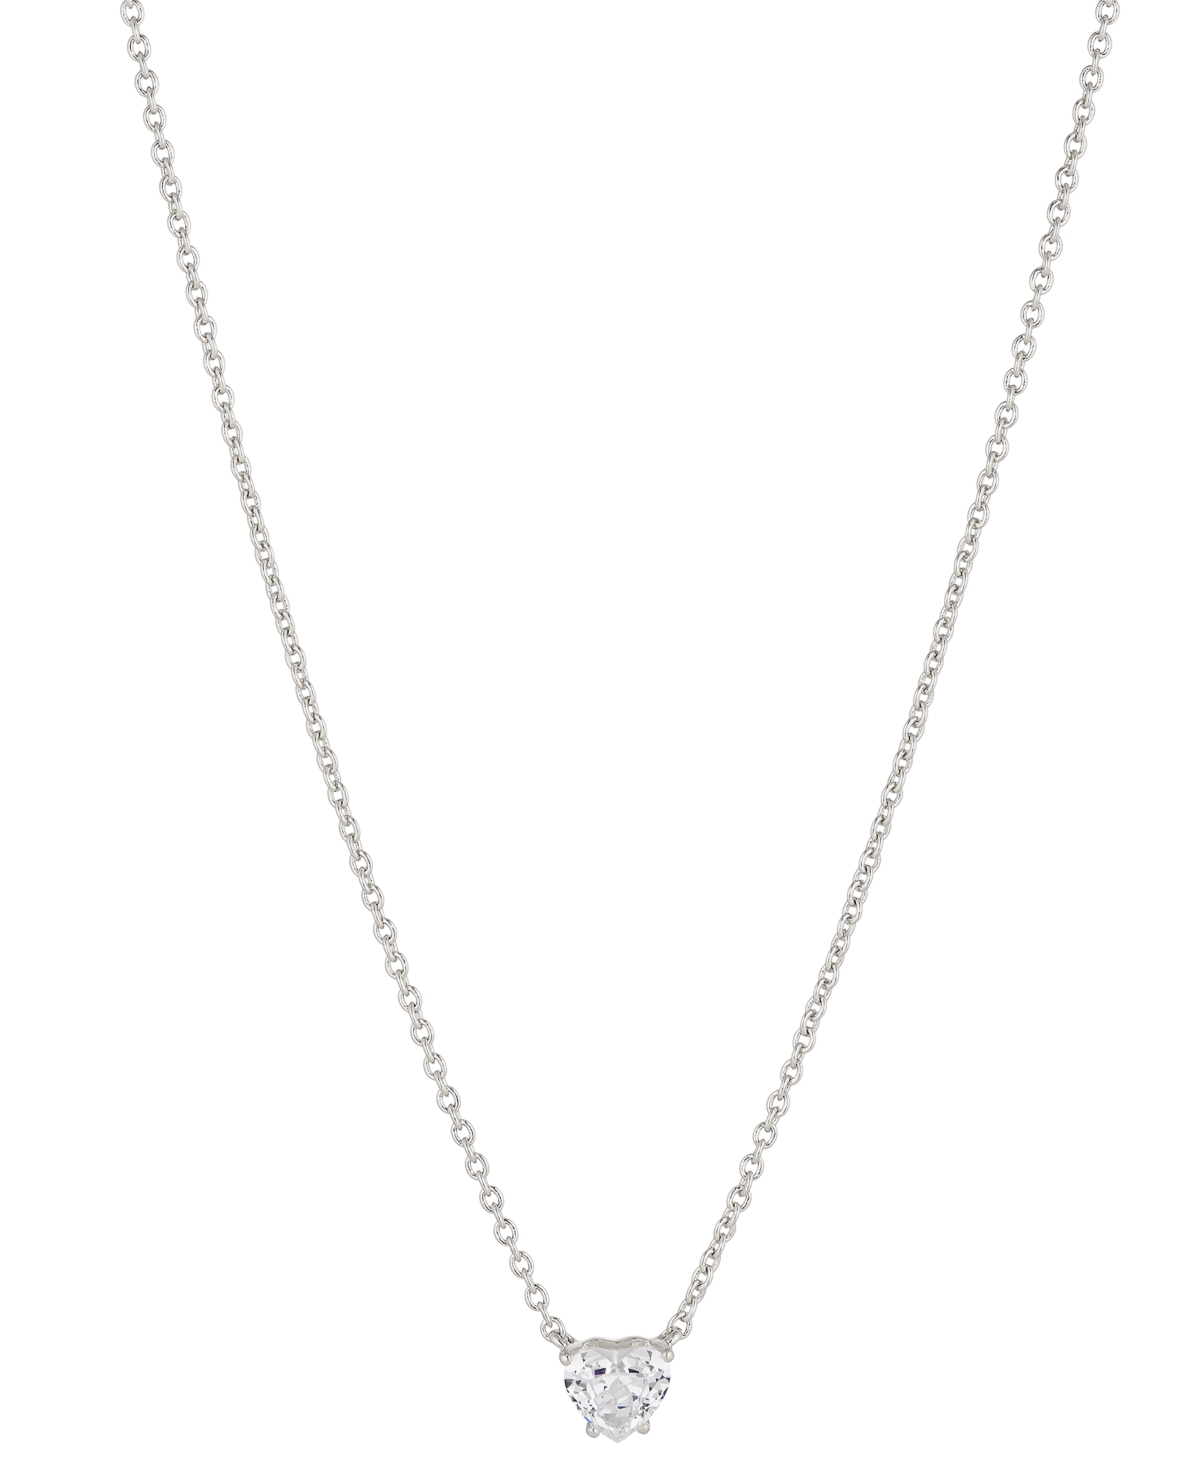 Cubic Zirconia Heart Pendant Necklace, 16" + 2" extender - Silver